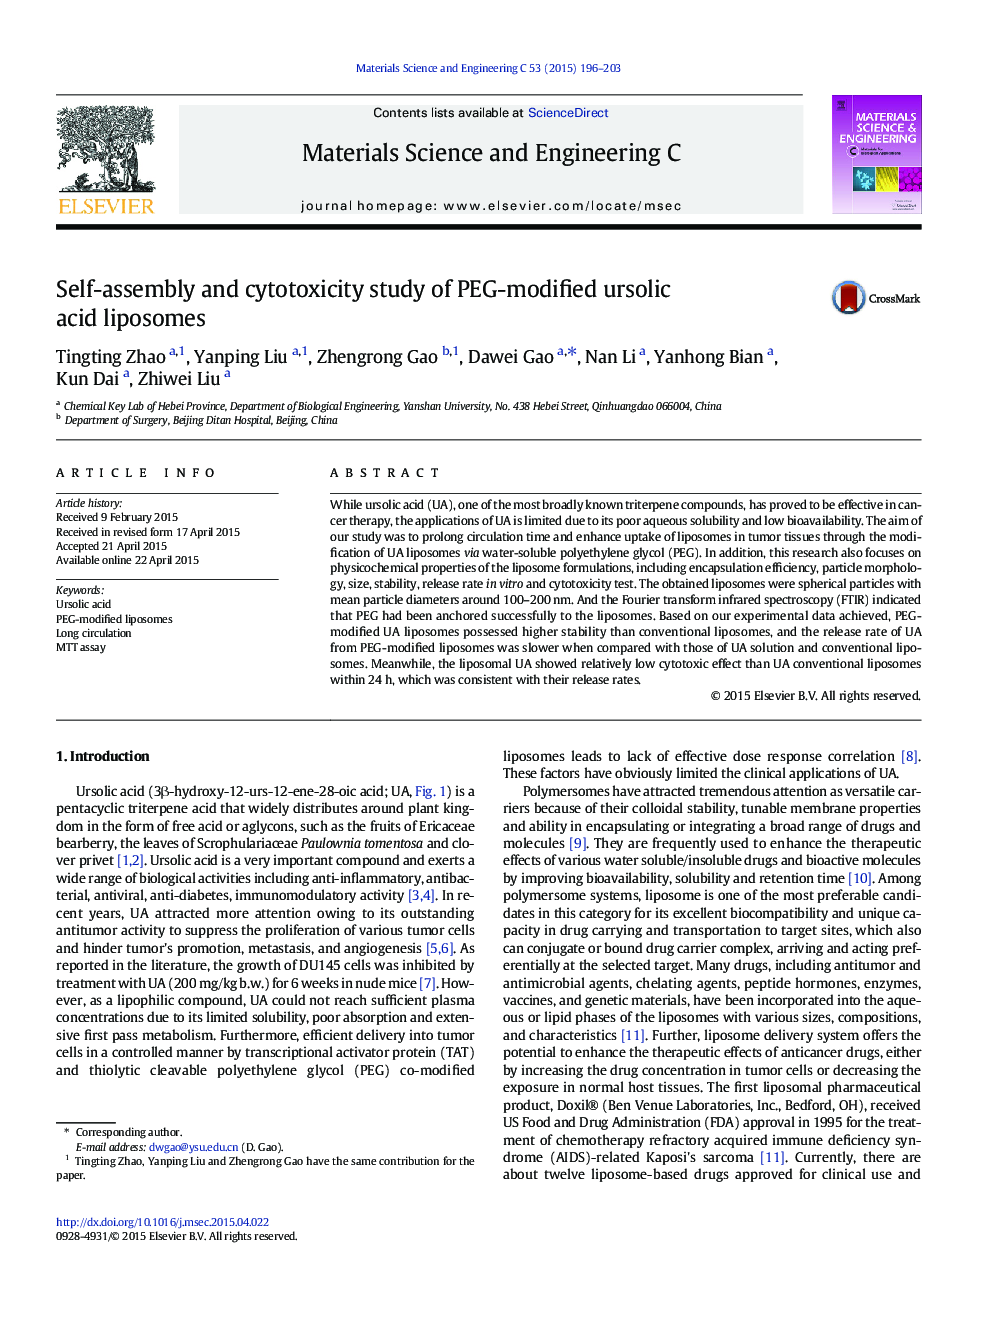 Self-assembly and cytotoxicity study of PEG-modified ursolic acid liposomes